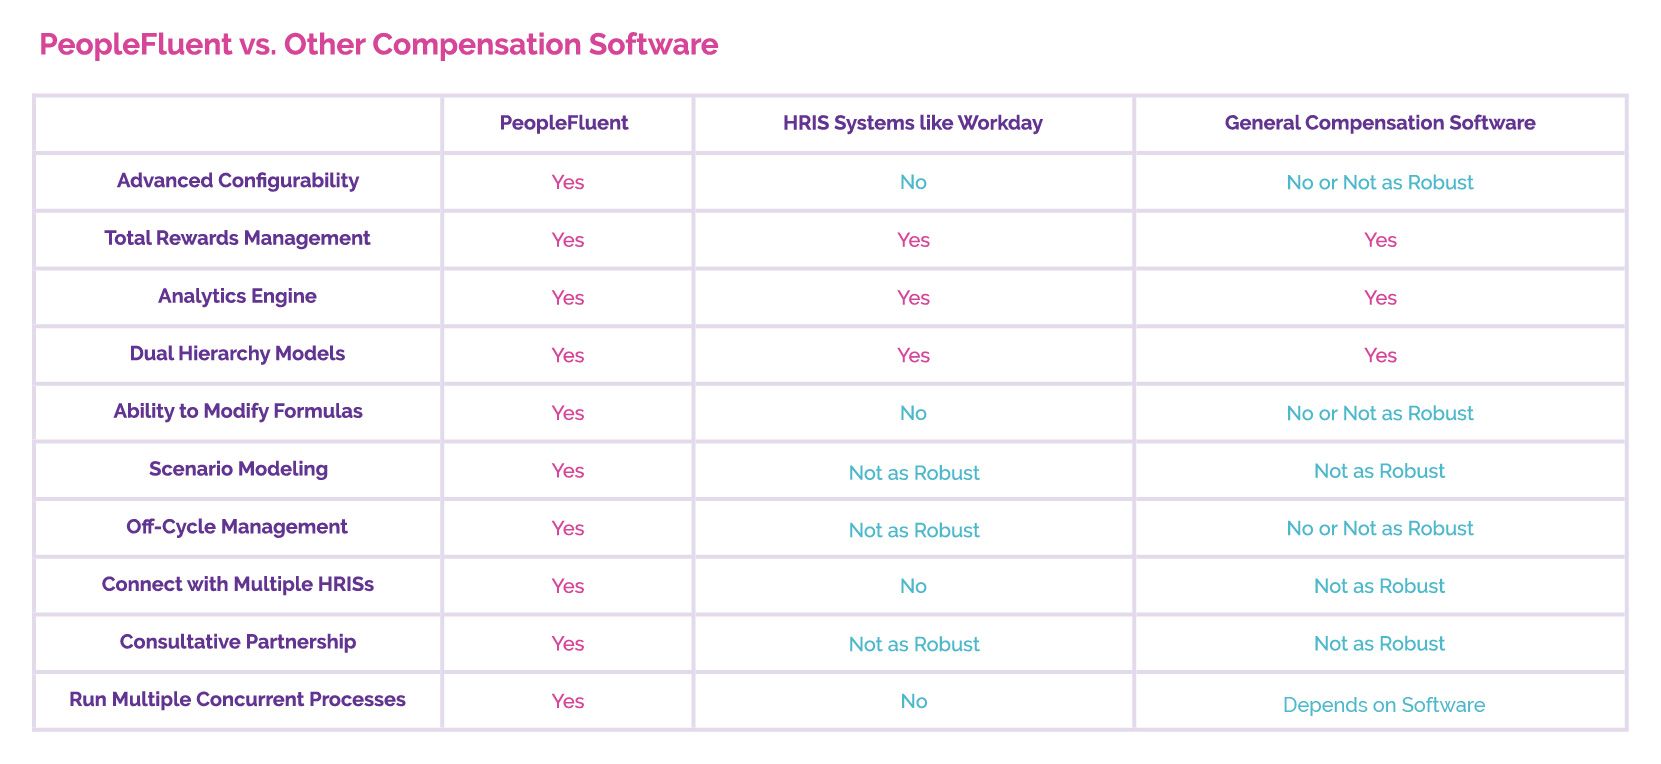 PeopleFluent vs Other Compensation Software 